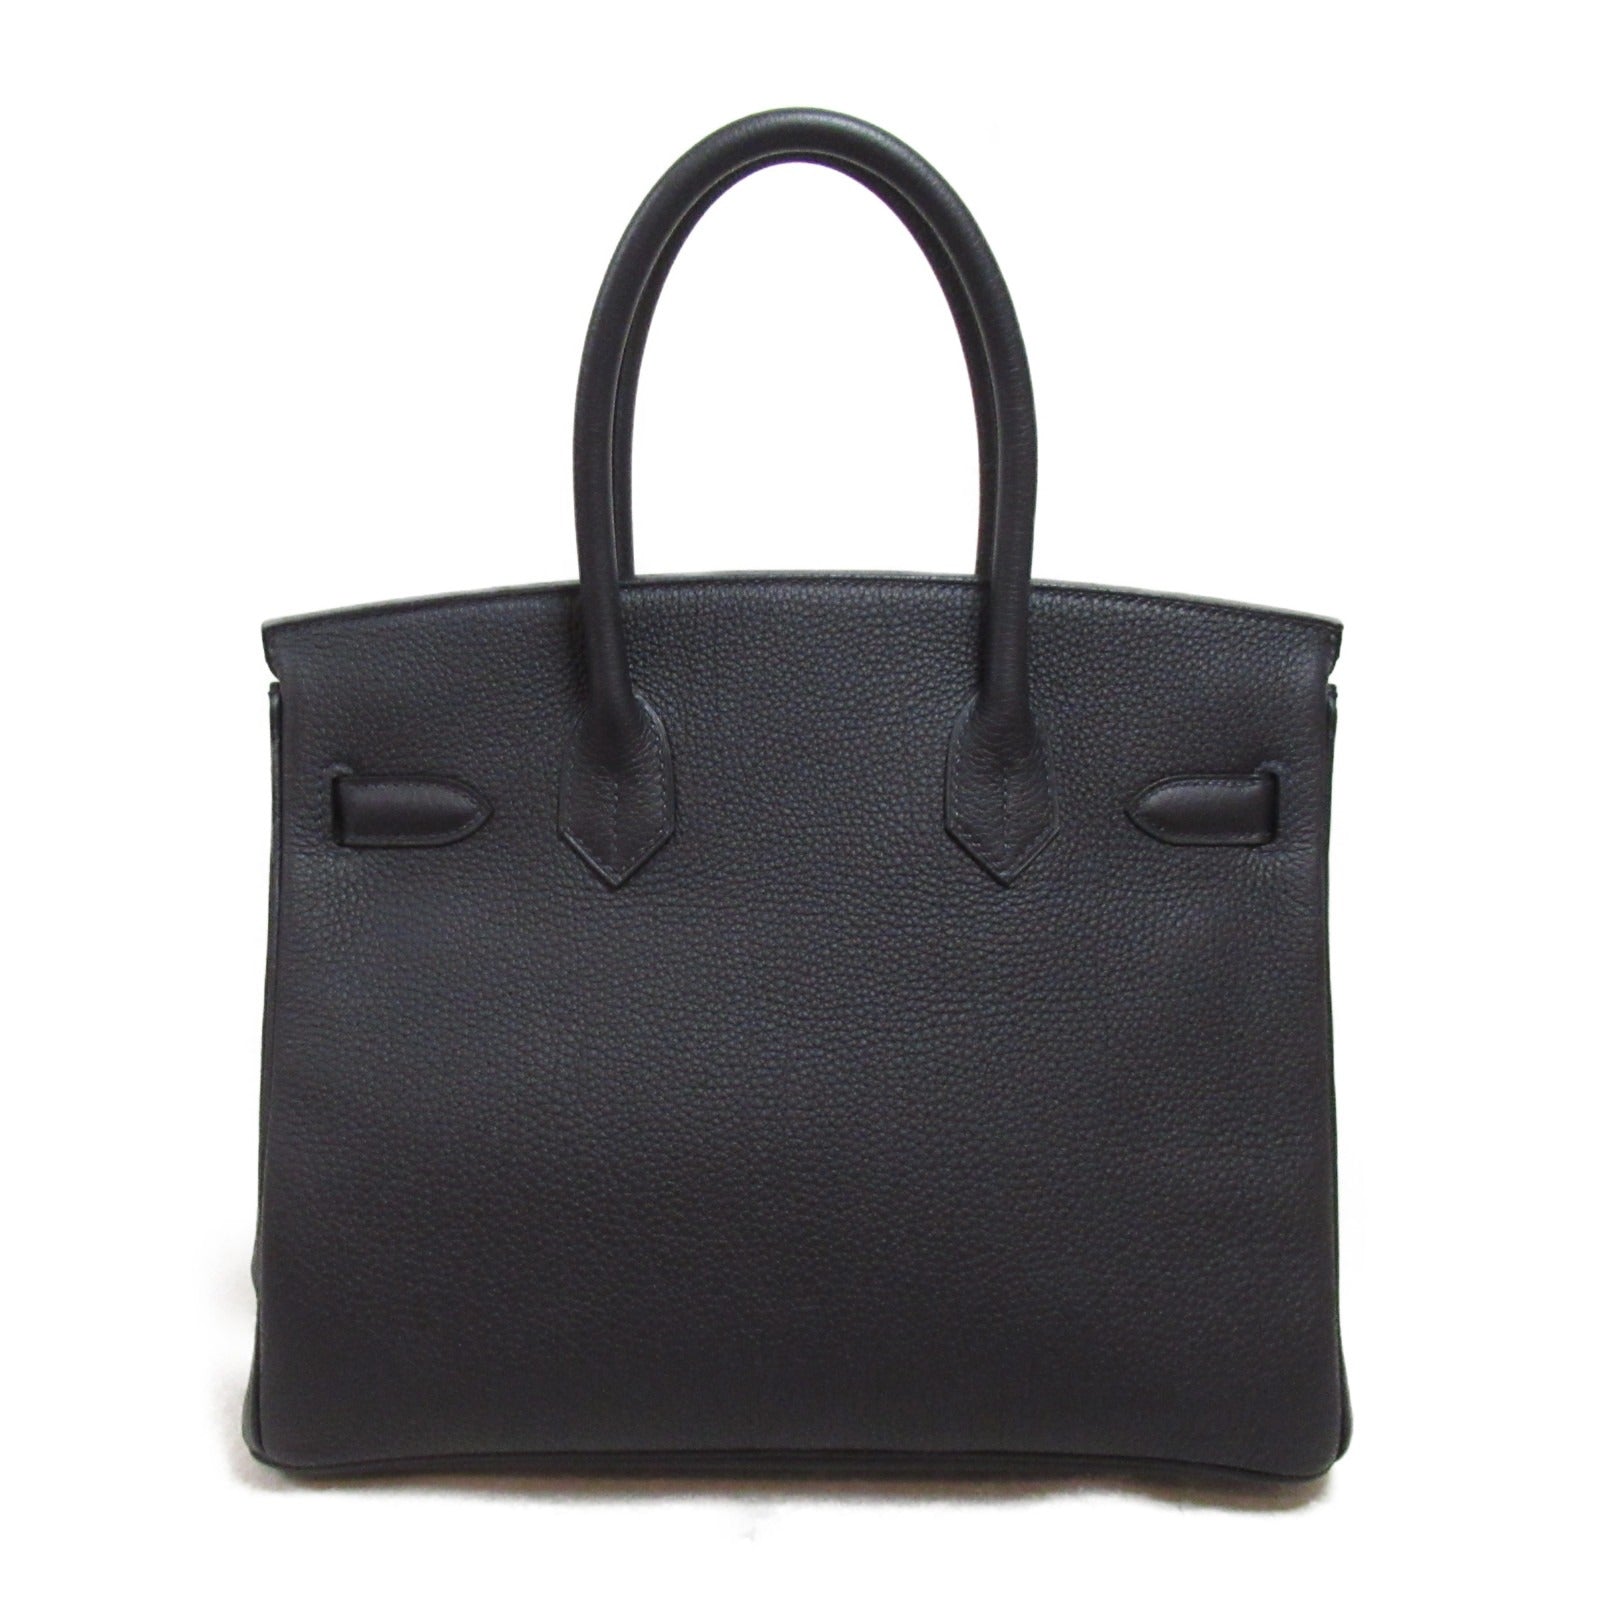 Hermes Hermes Birkin 30 Handbag Handbag Handbag Handbag Handbag TOGO LADYS NAIBY